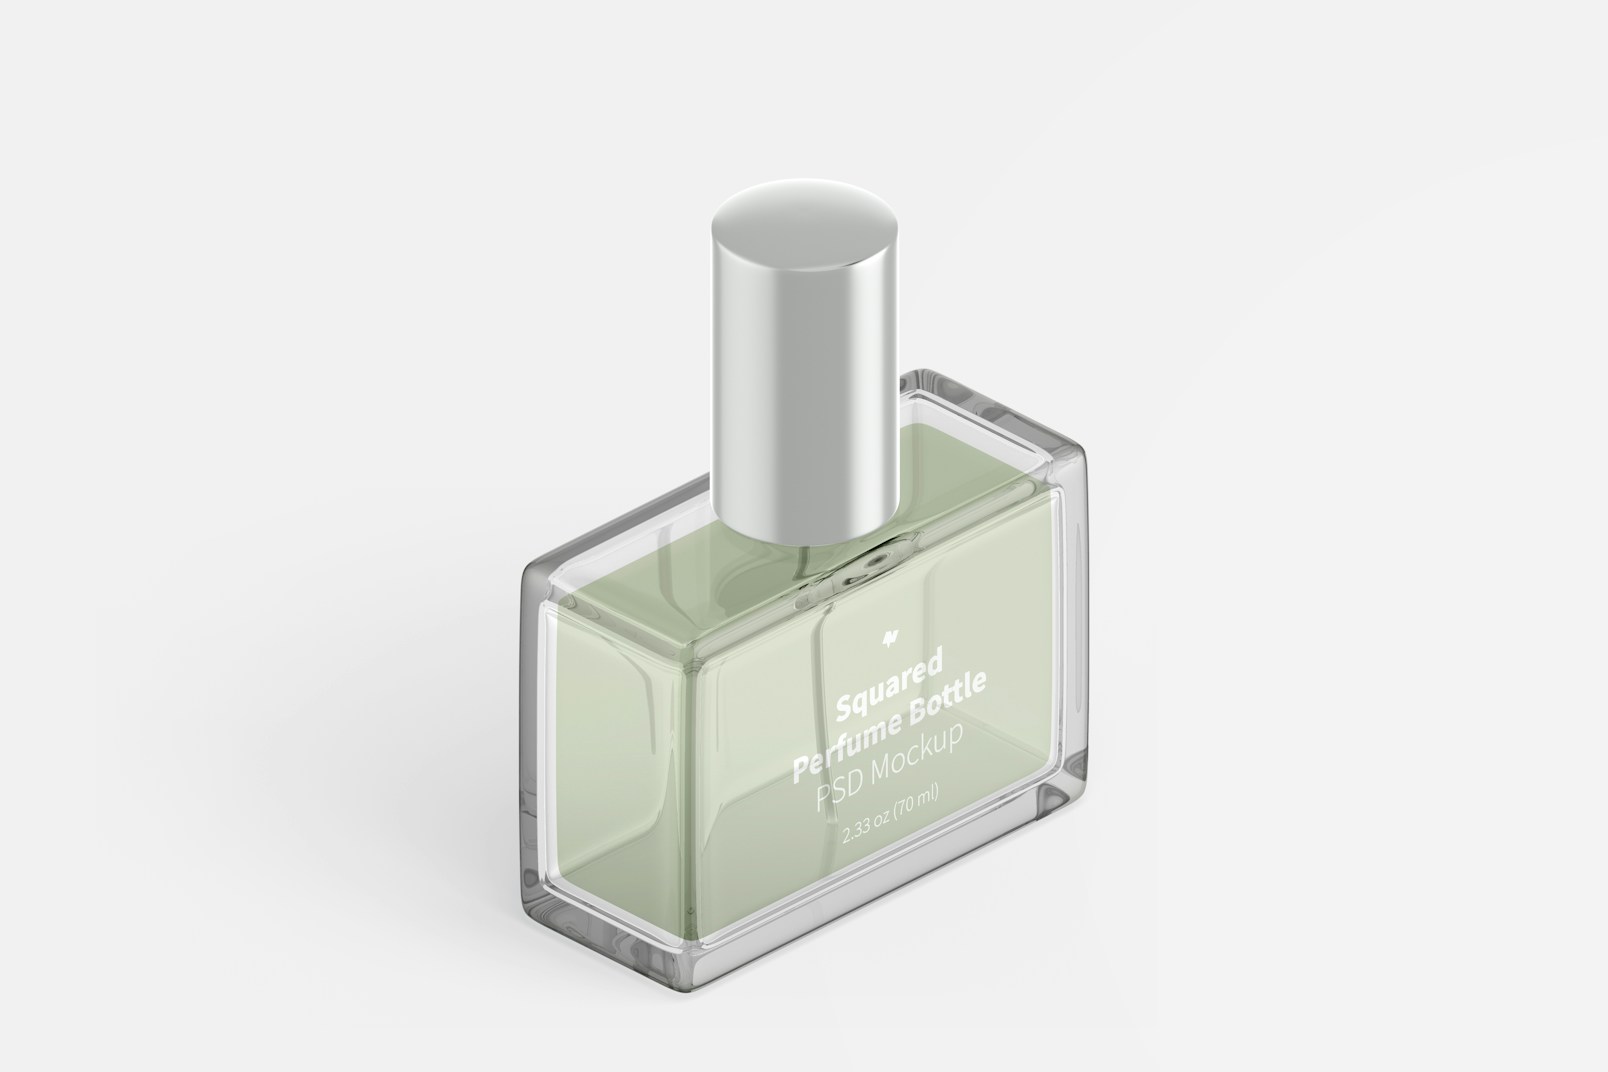 Squared Perfume Bottle Mockup, Isometric Left View